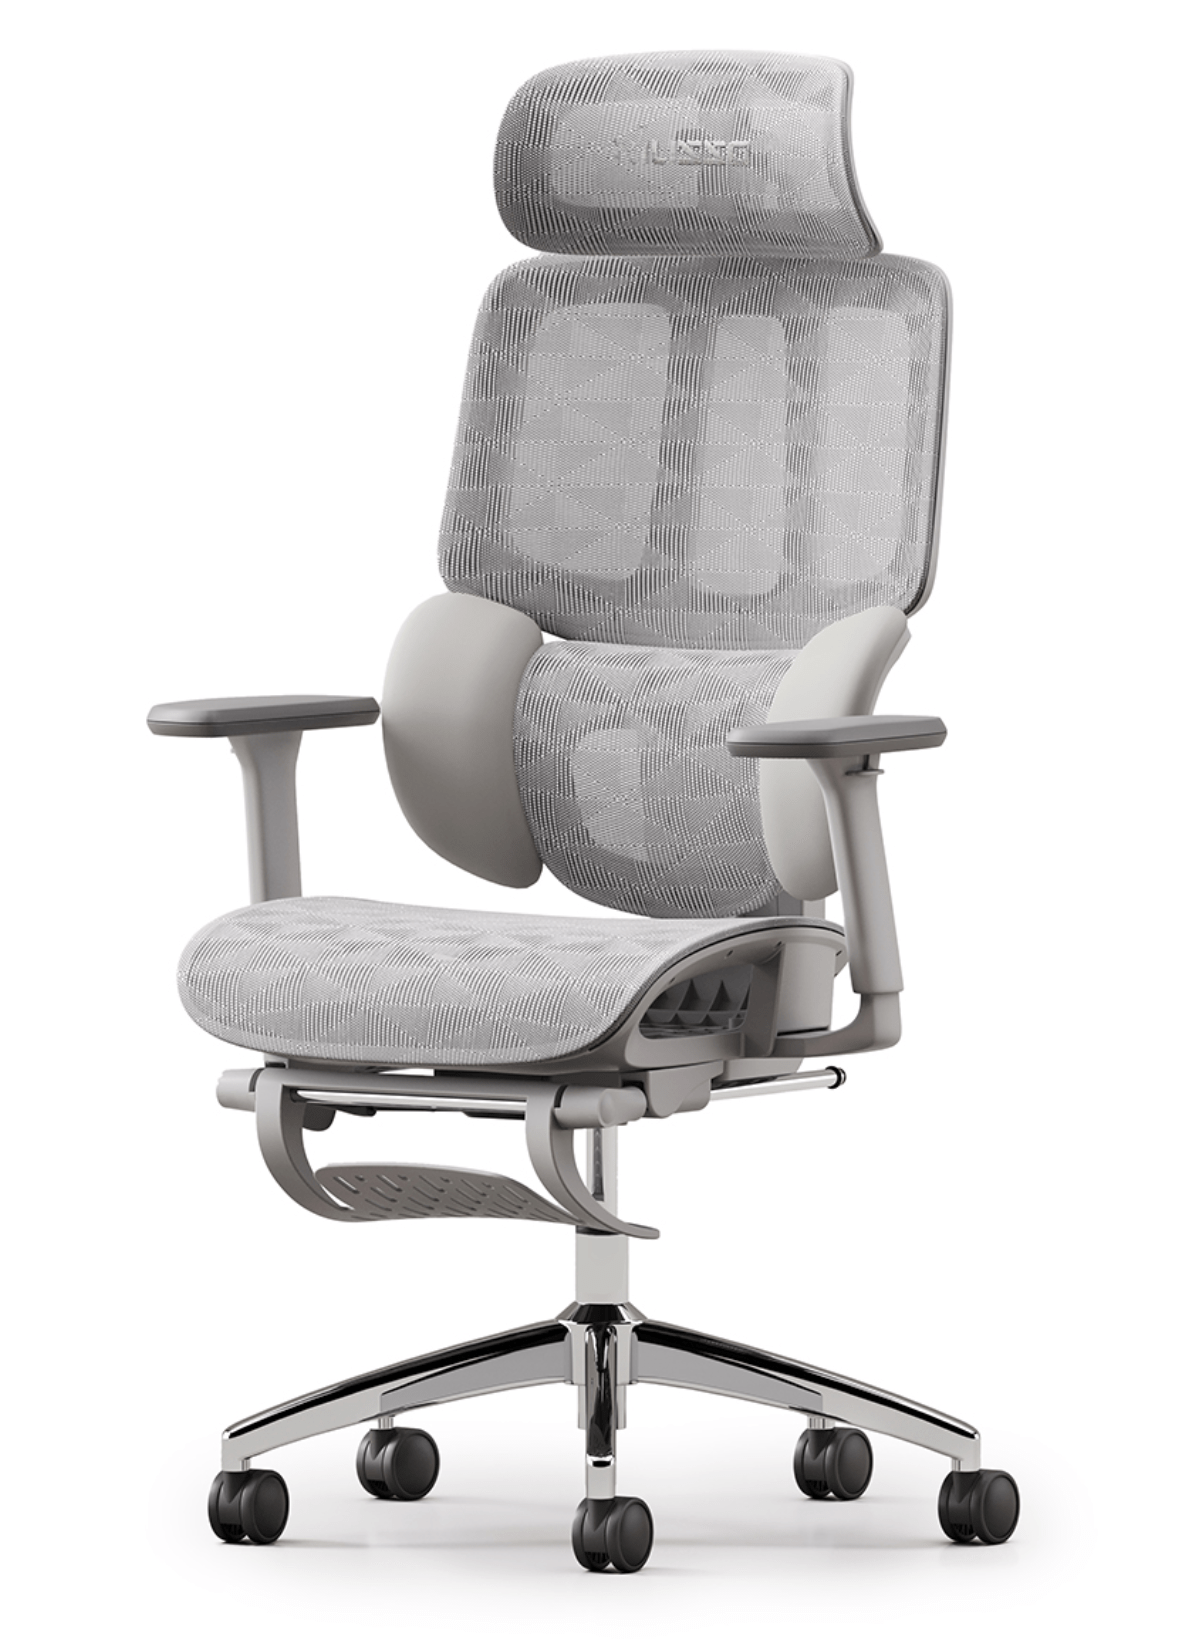 MUSSO H80 Classic Ergo Chairs  Adjustable Headrest Ergonomic Mesh Office Chair  XL SIZE